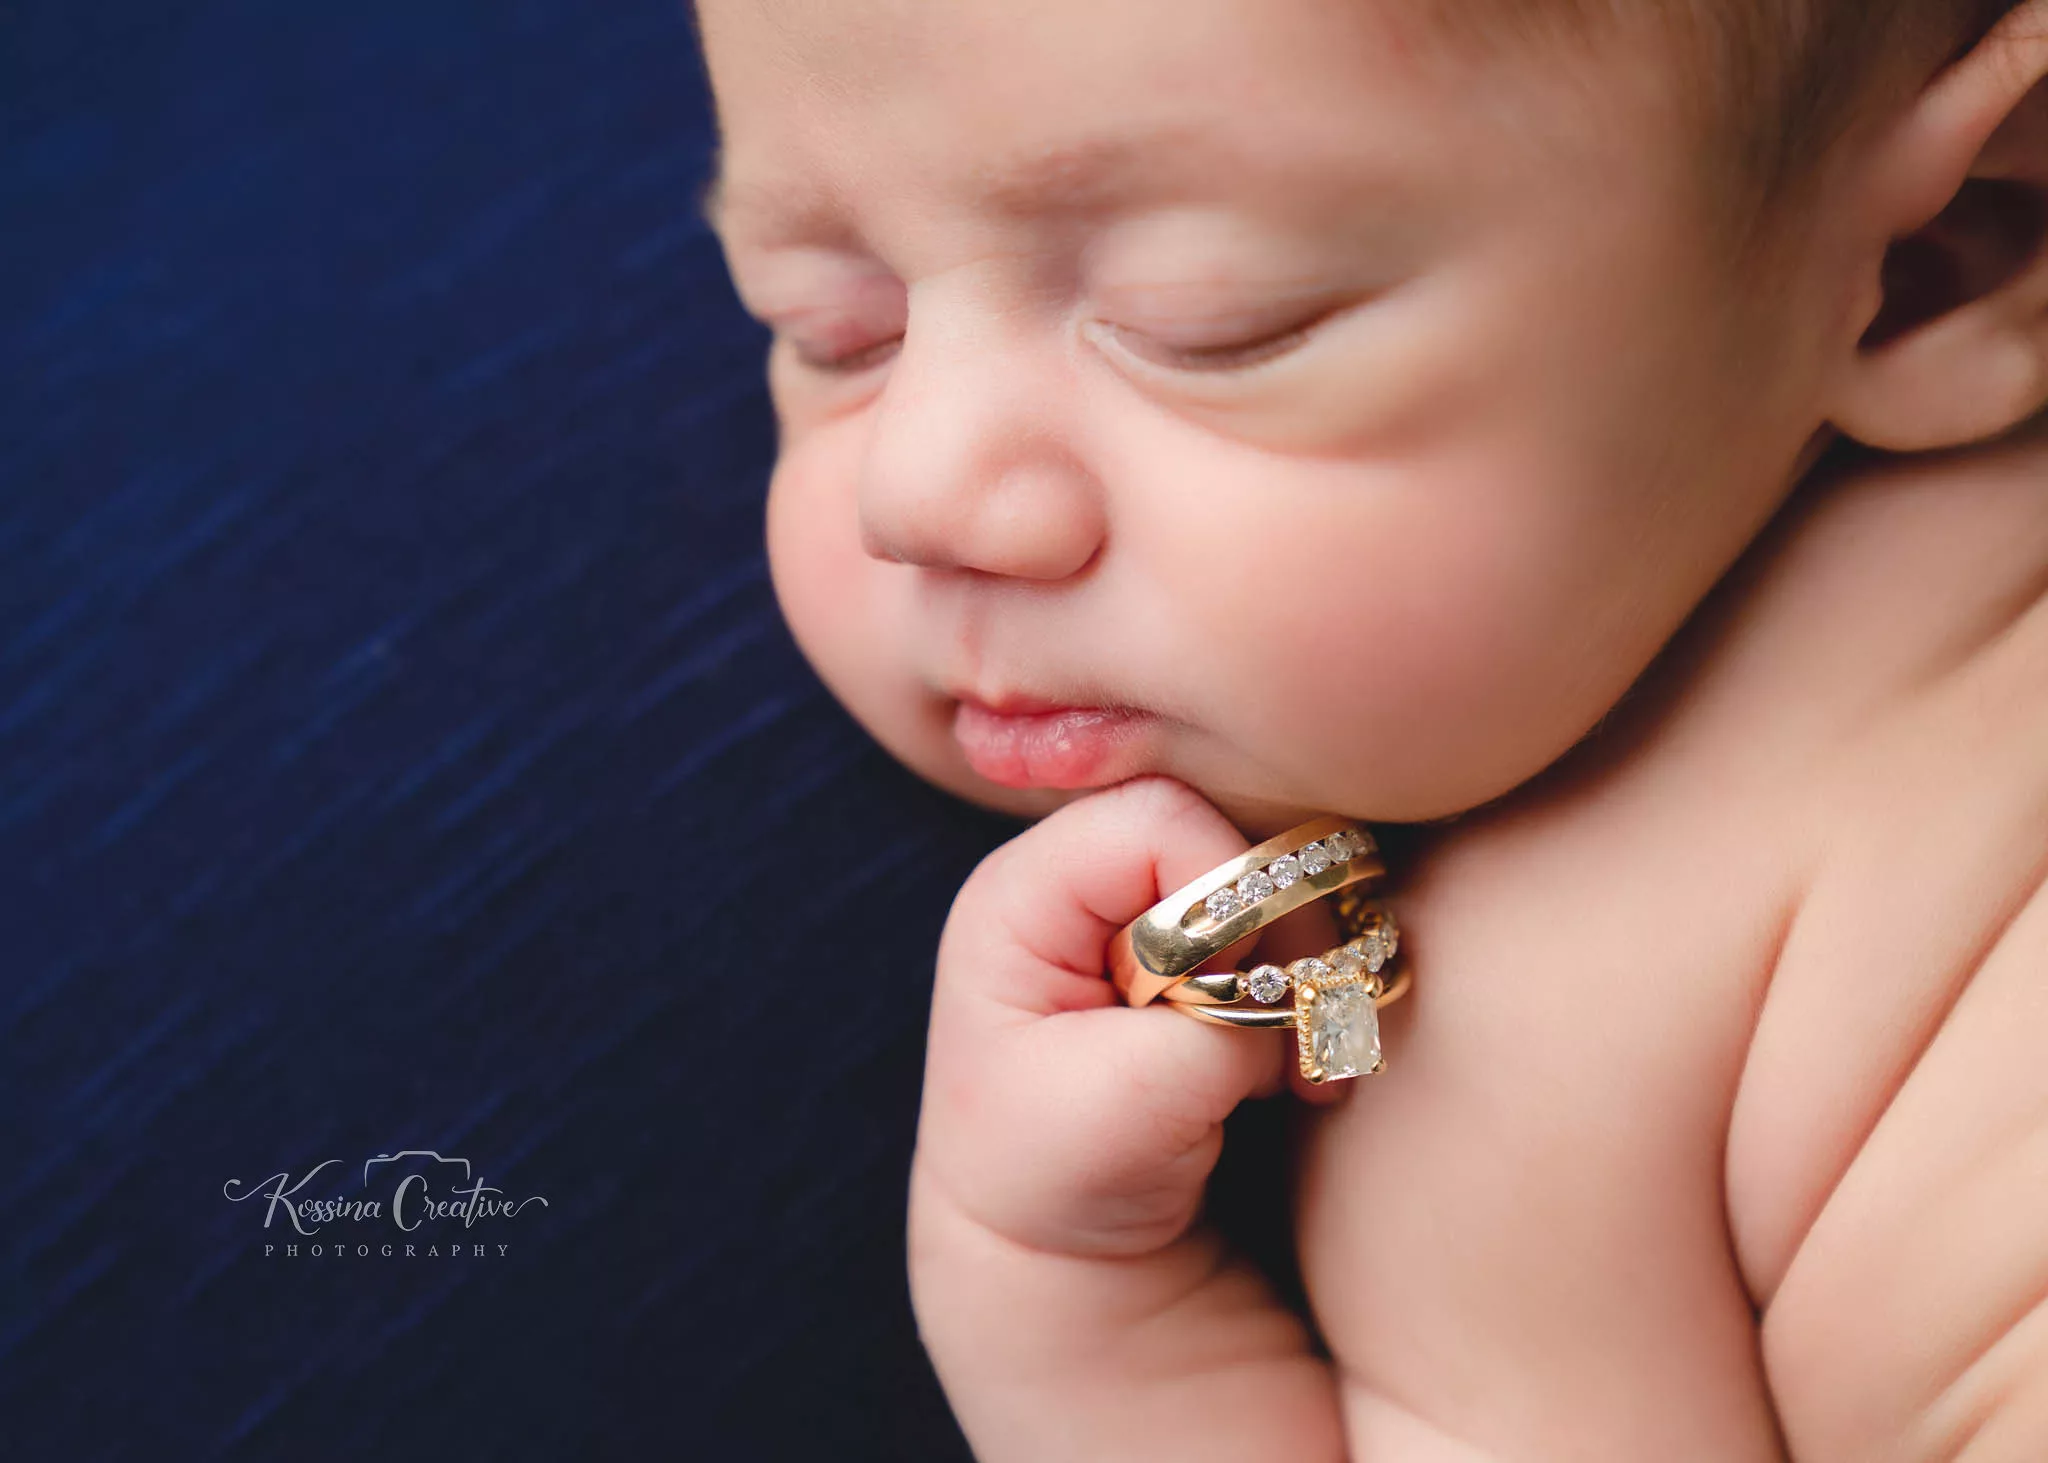 Orlando new born photography baby photo studio baby holding rings